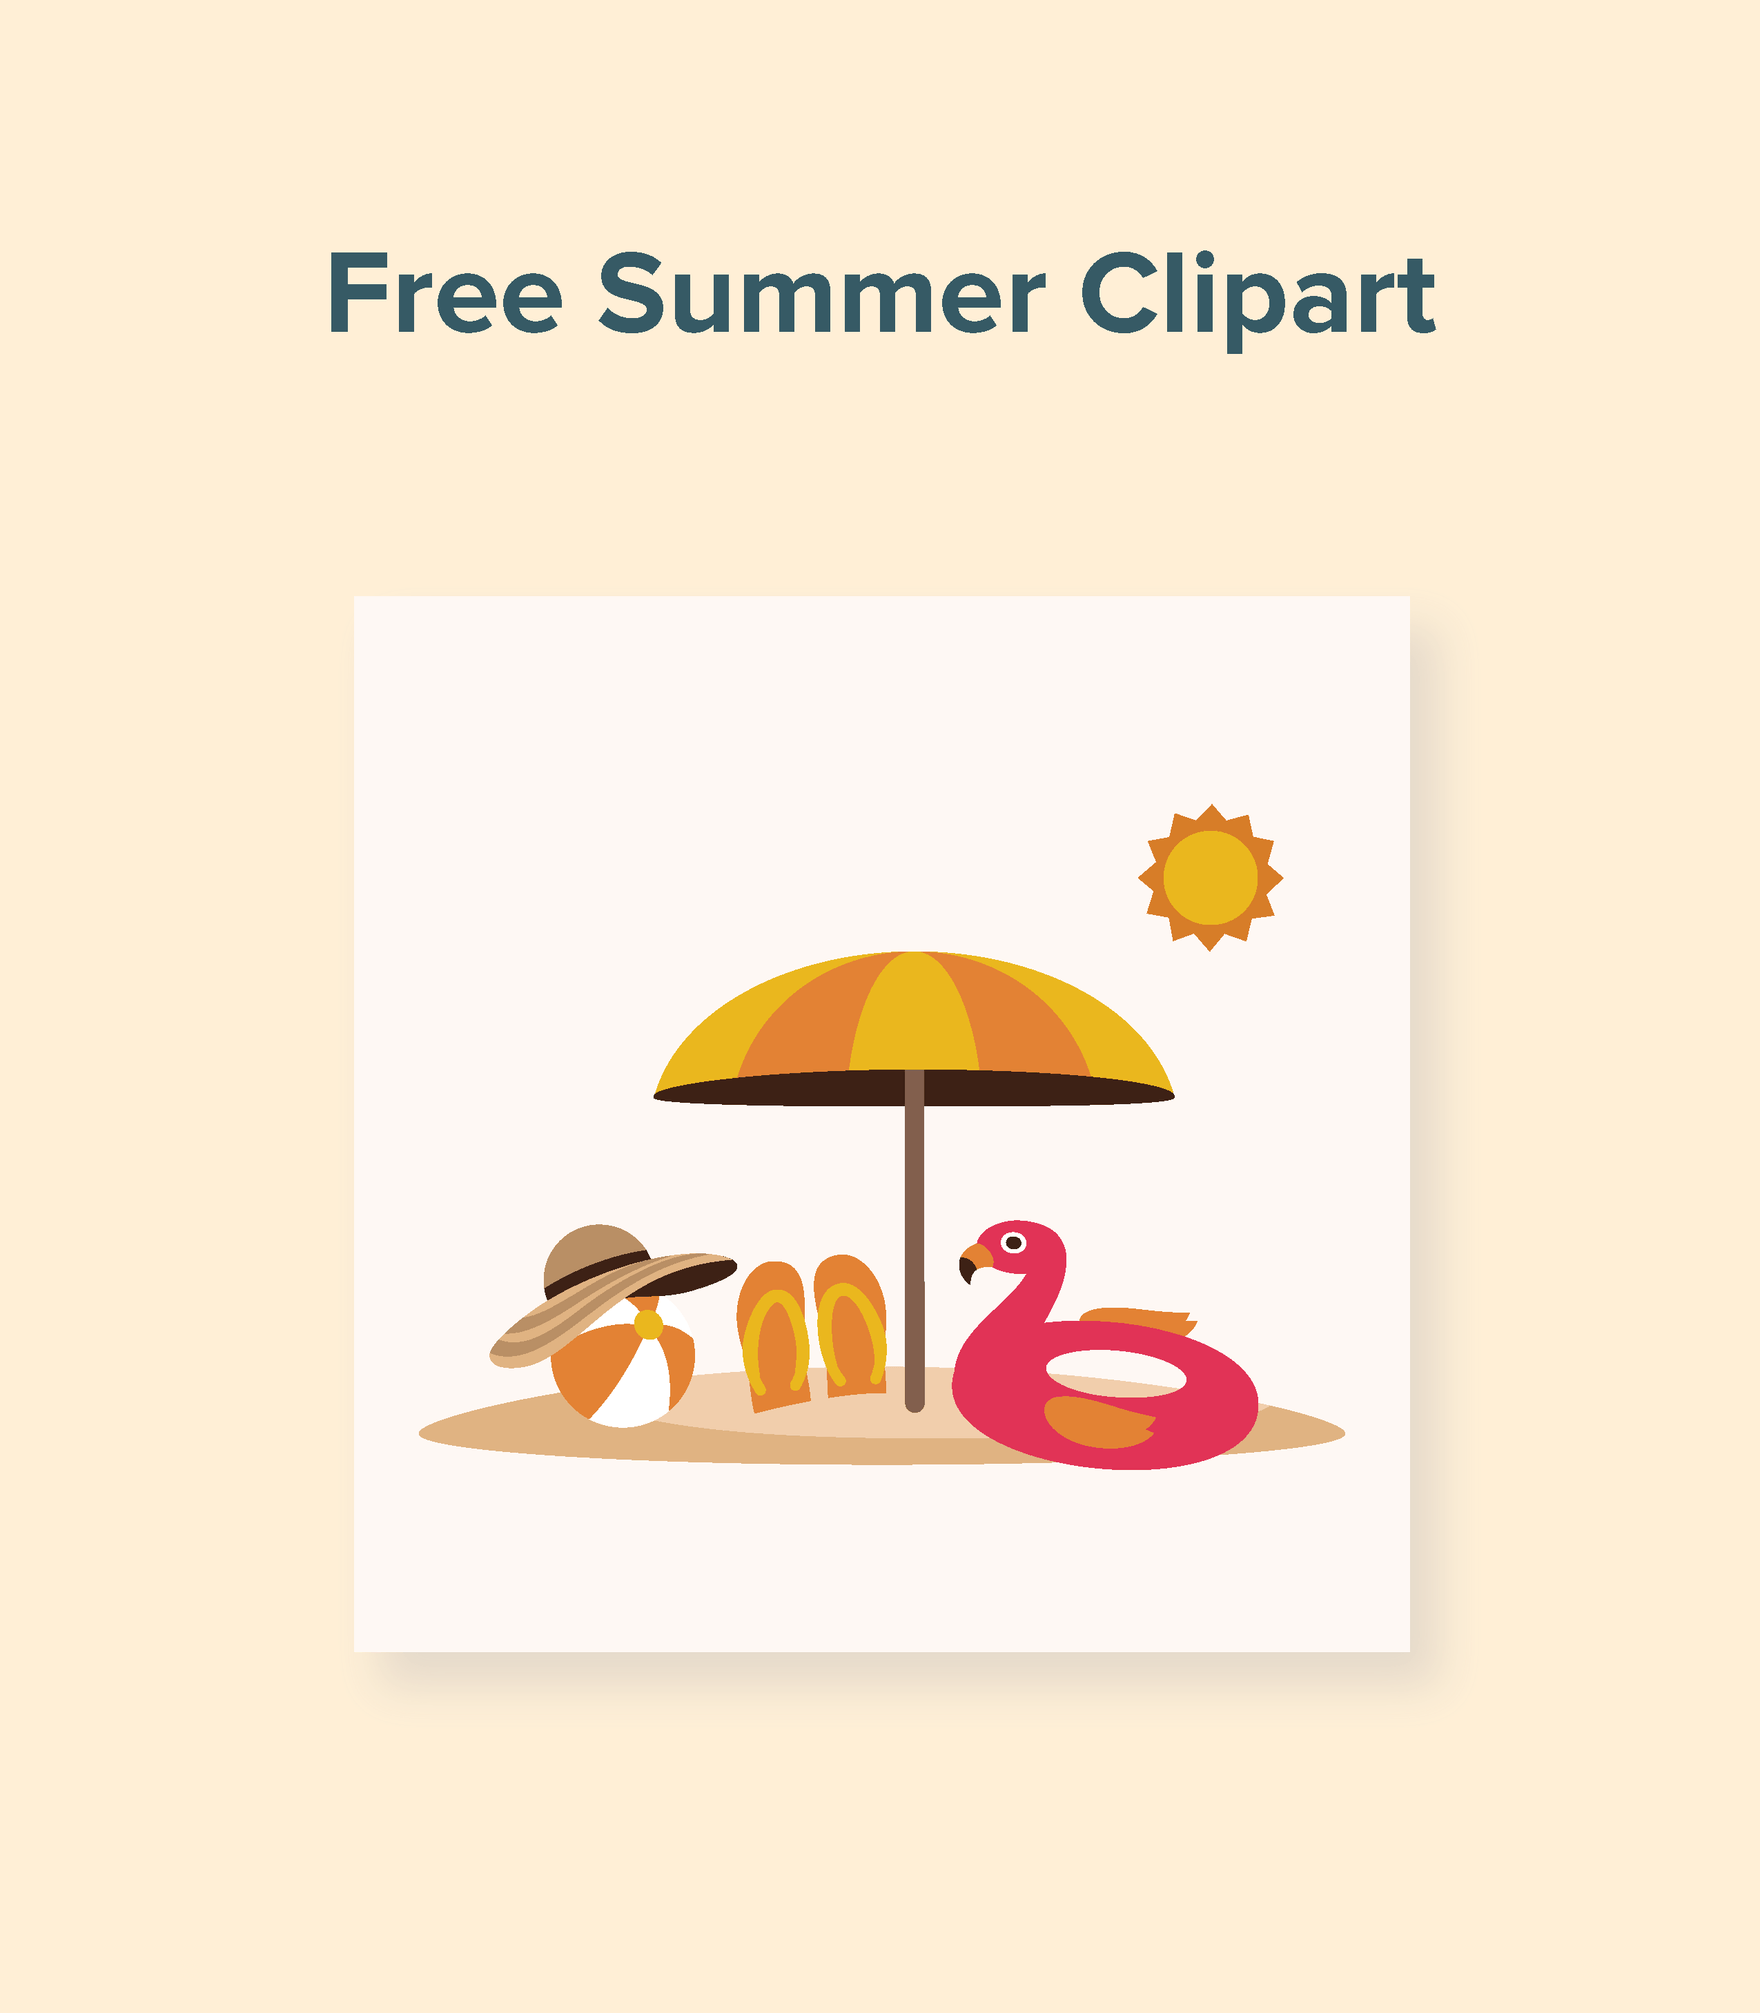 Free Summer Clipart  in Illustrator, PSD, EPS, SVG, JPG, PNG